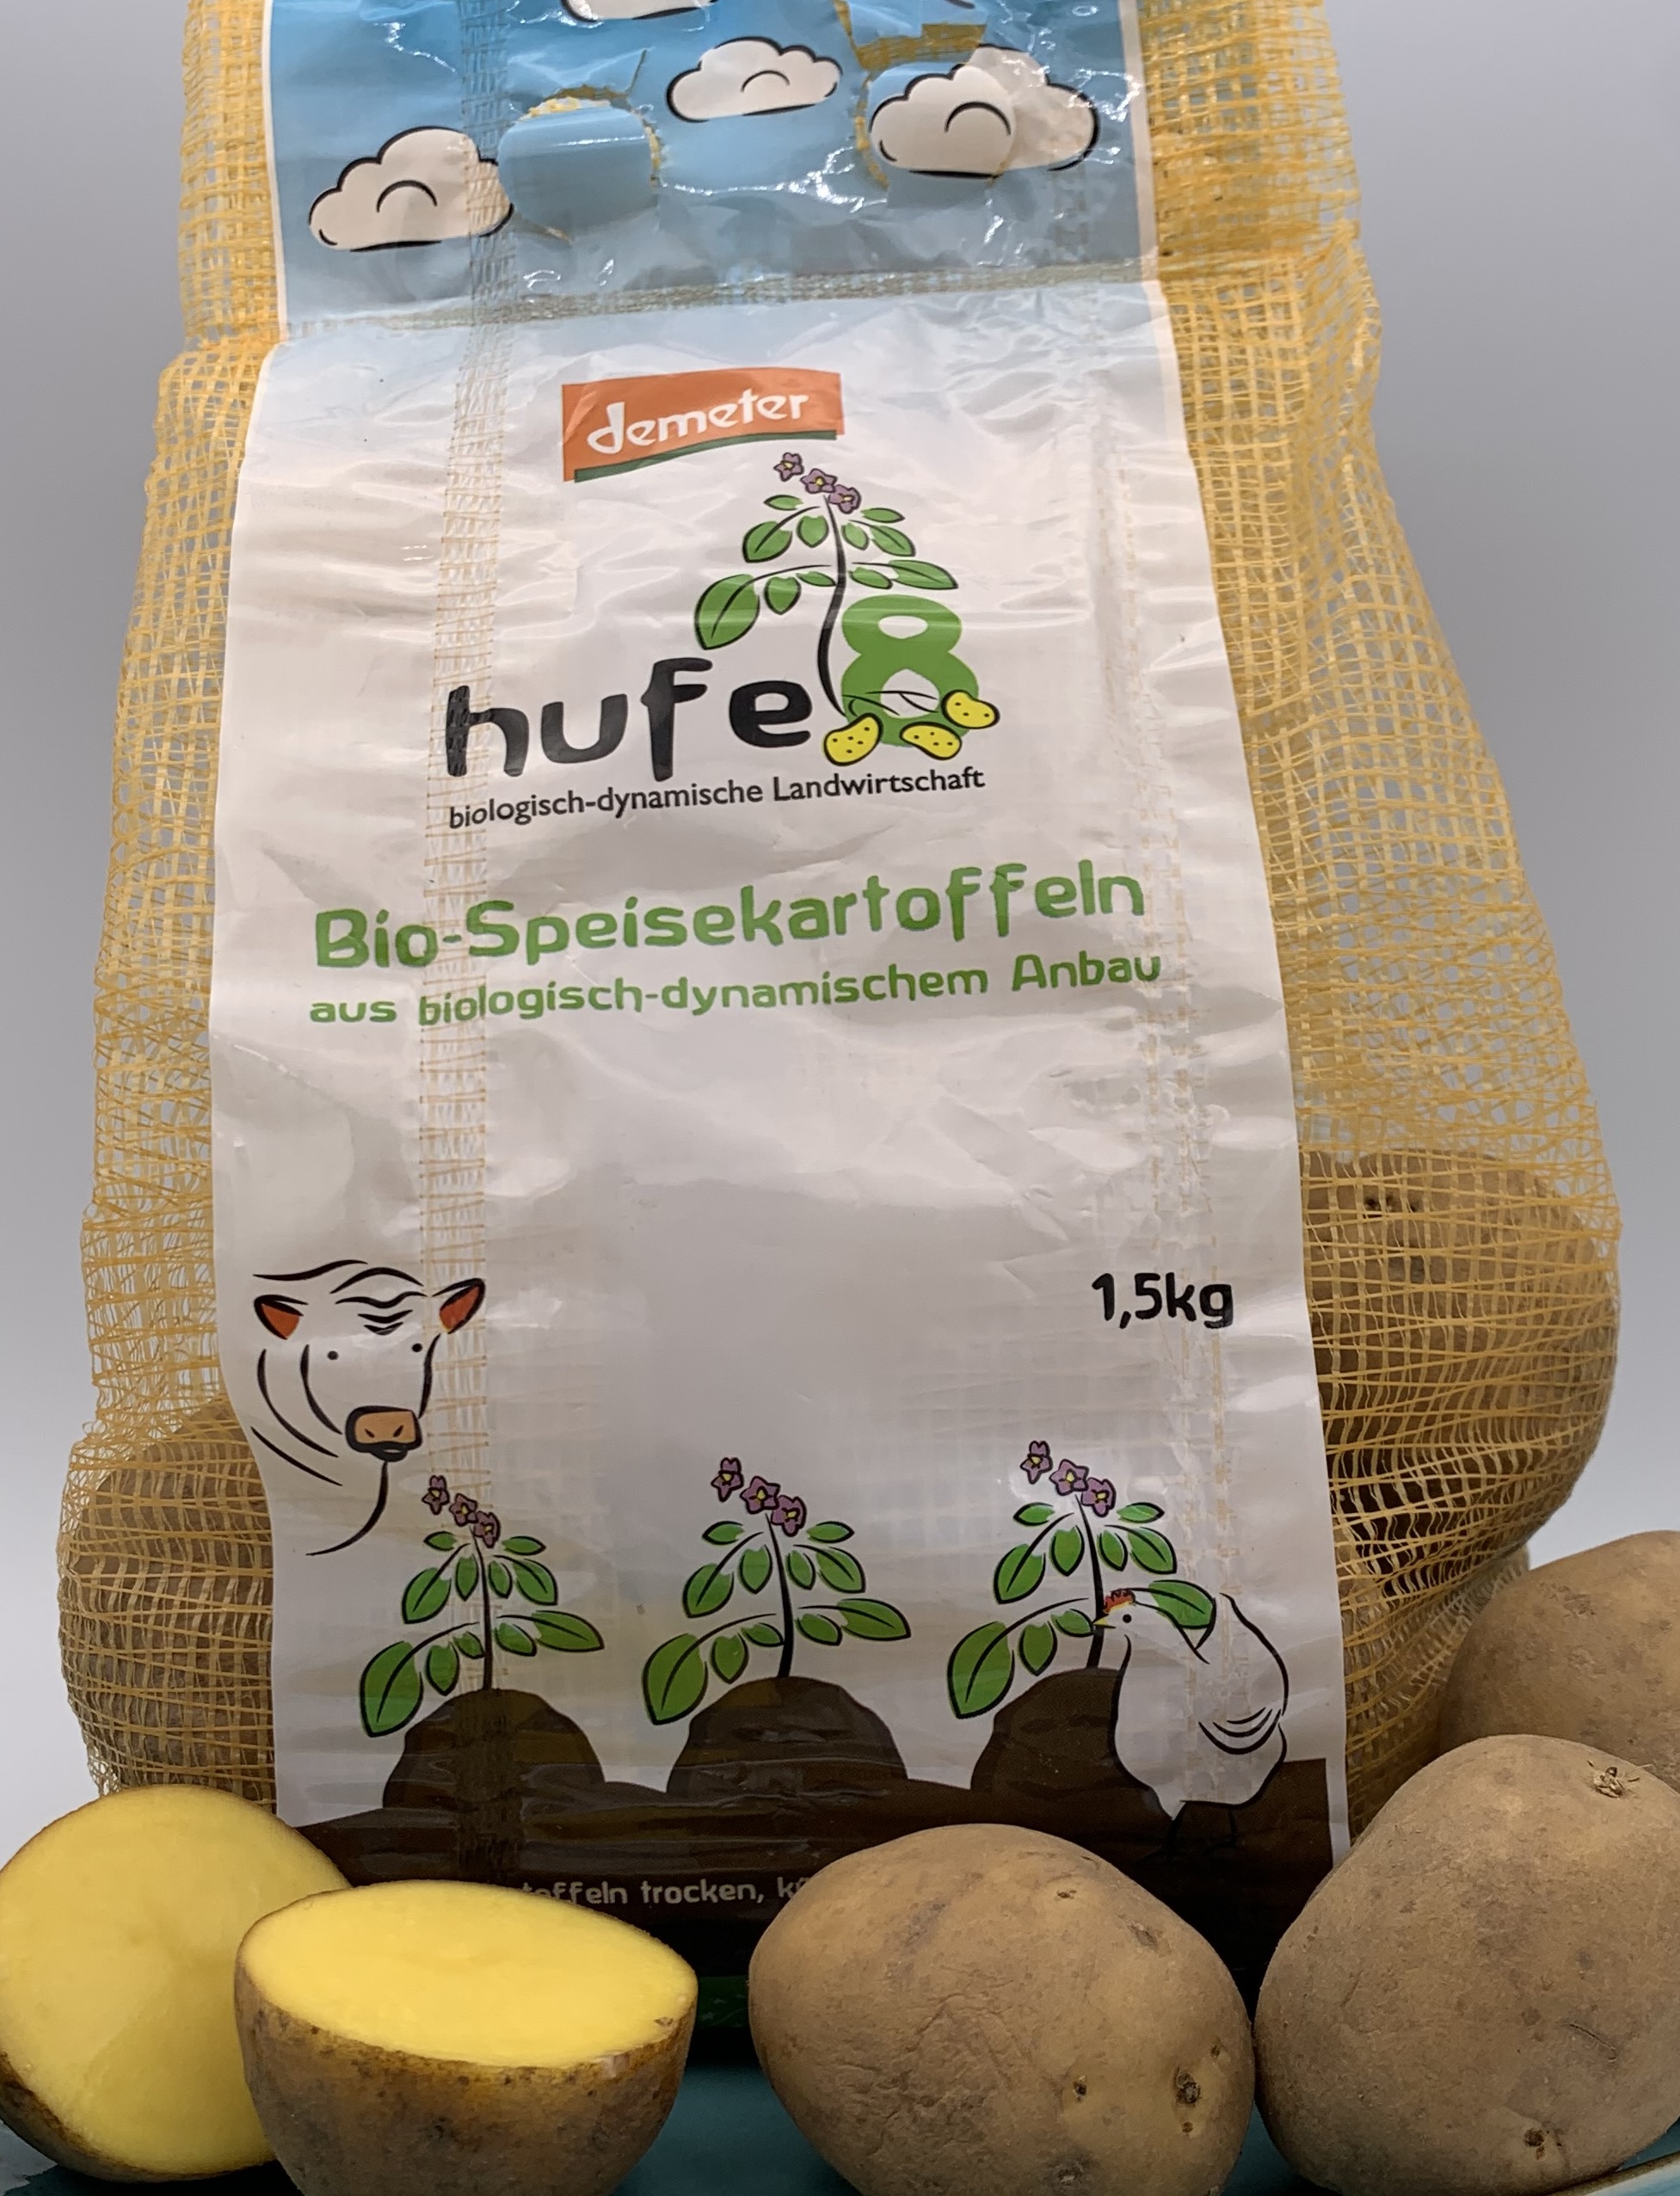 Kartoffeln 1,5kg Kartoffeln Onlineshop | Hufe8 Acker | |